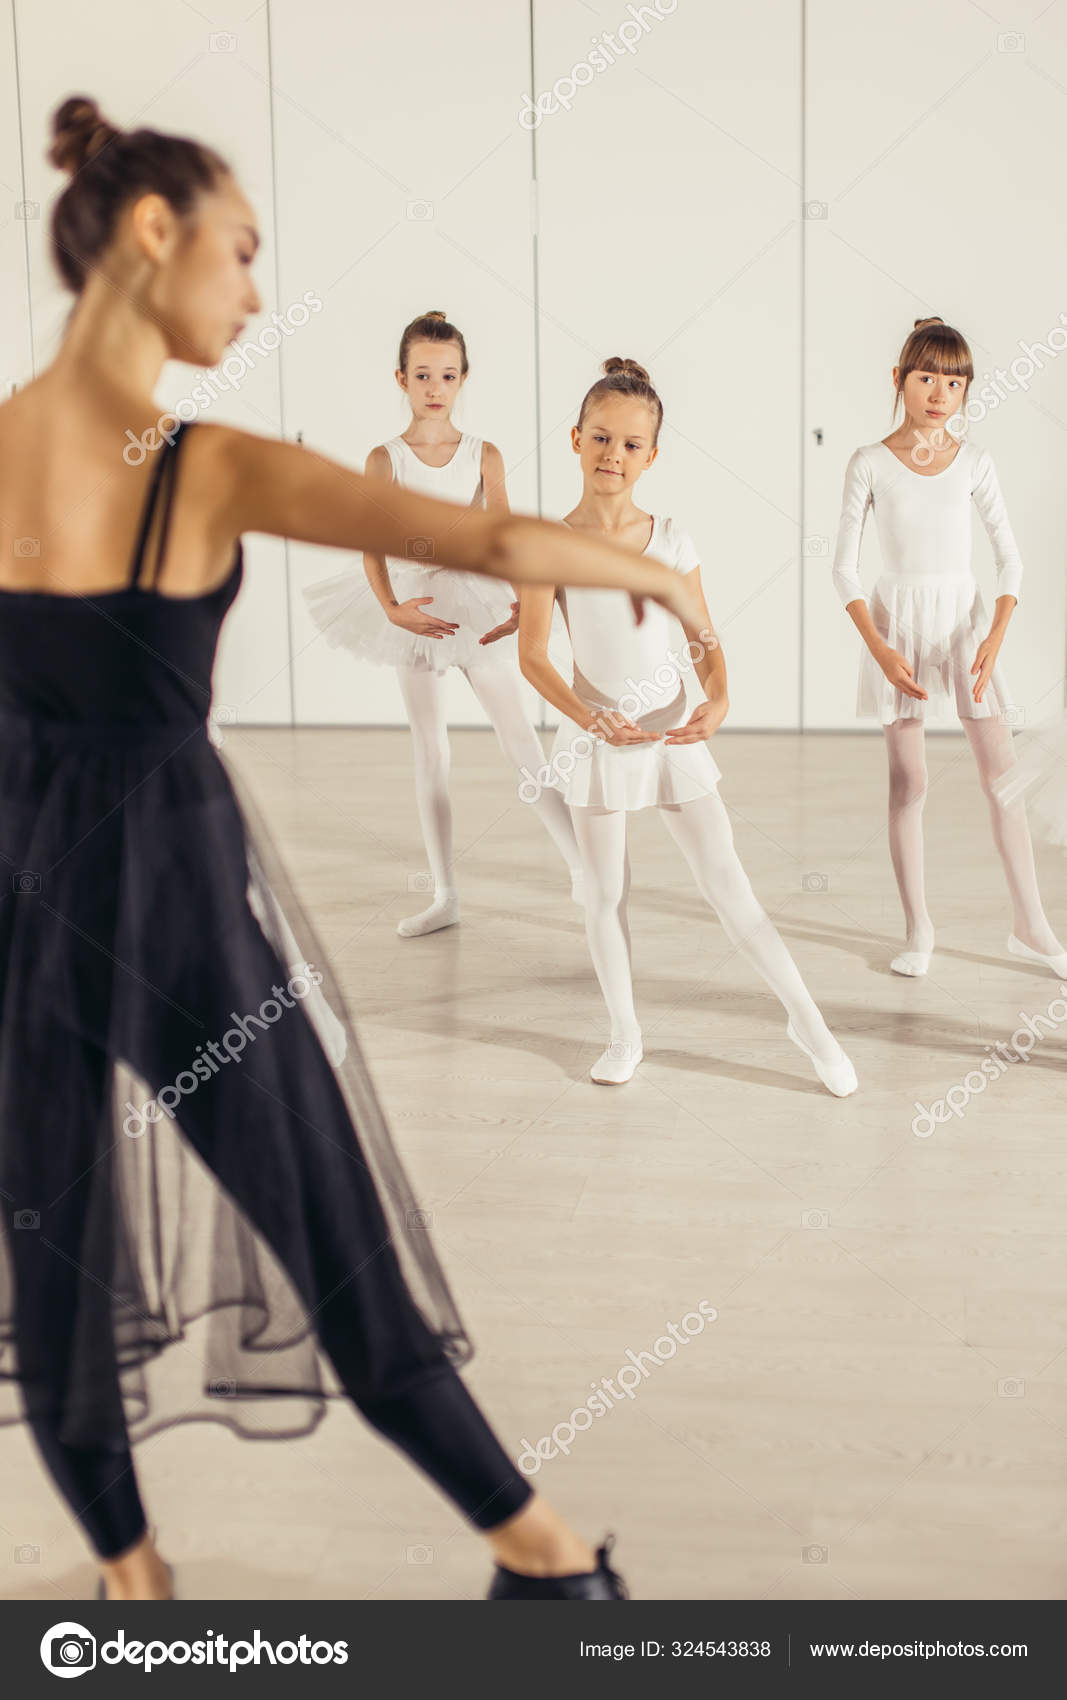 Ballet Dance Image & Photo (Free Trial) | Bigstock